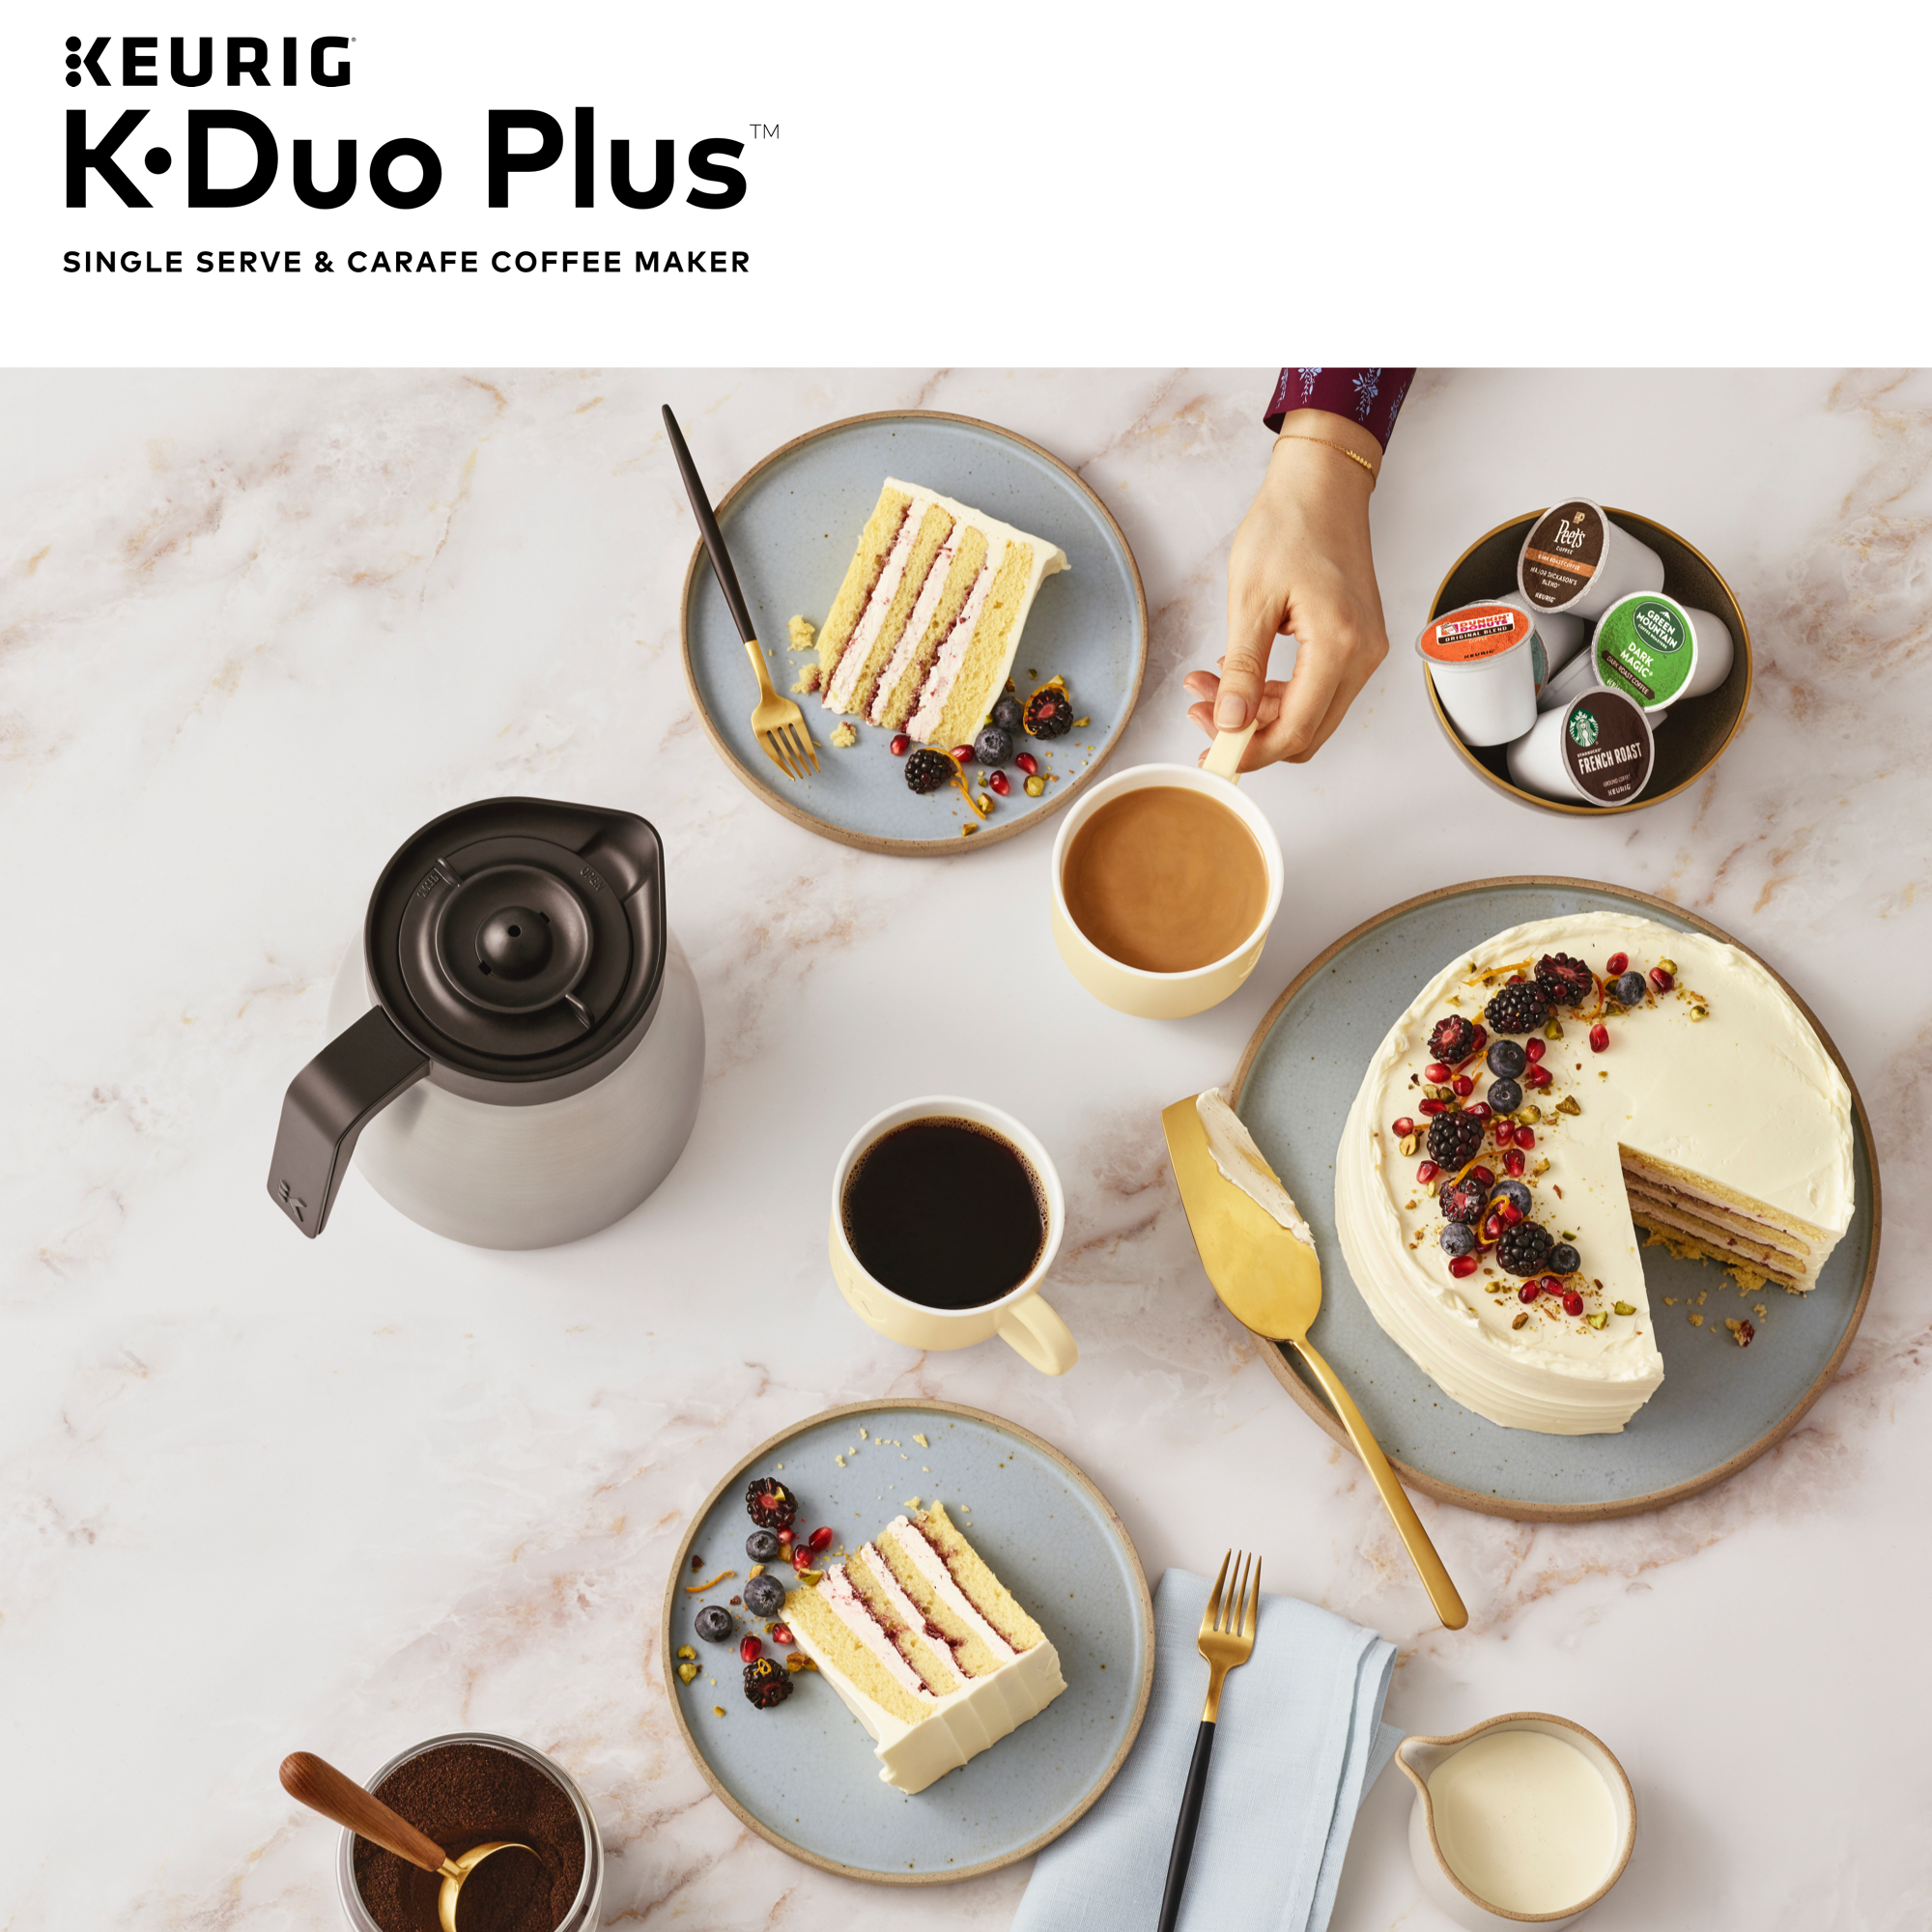 Keurig K-Duo Plus Single Serve & Carafe Coffee Maker - image 4 of 24